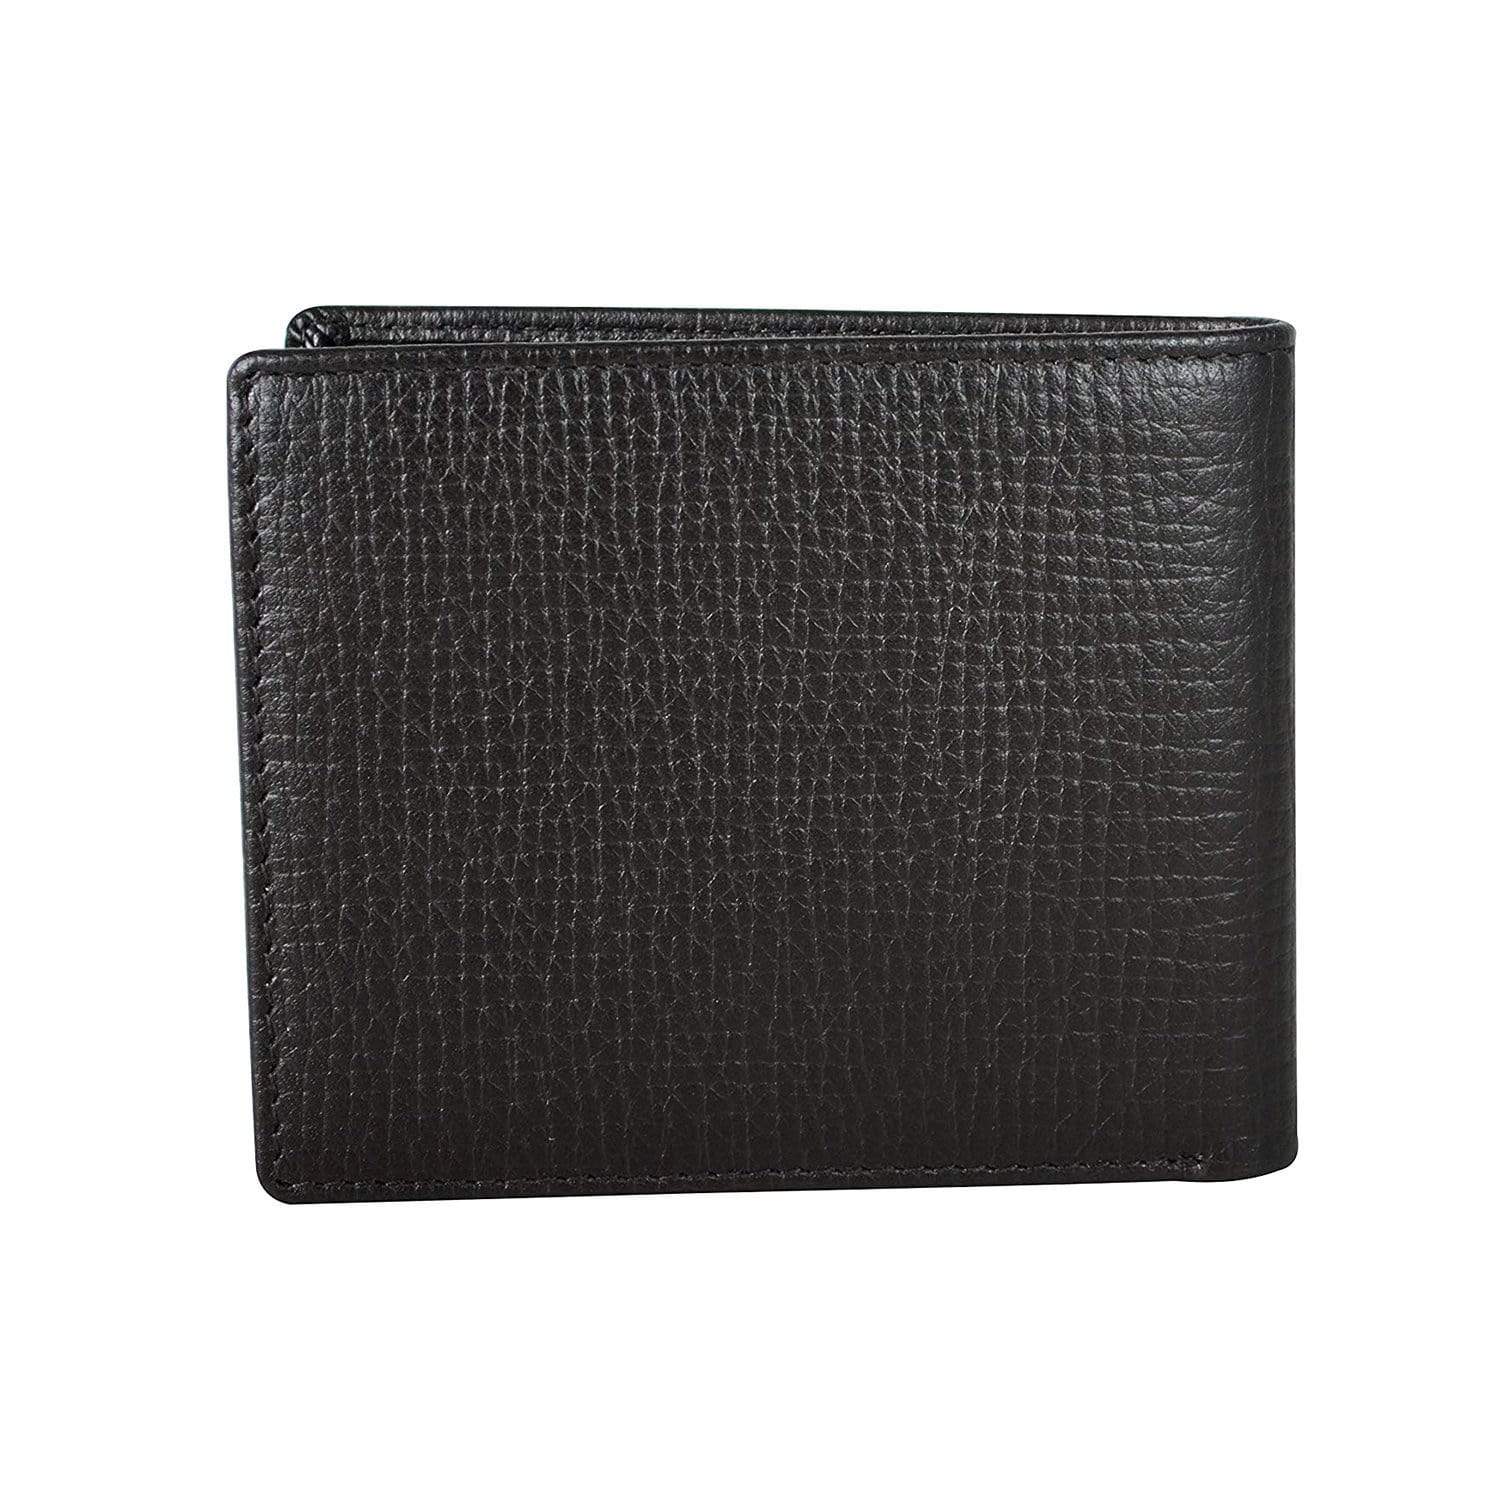 Cross RTC ID Leather Wallet for Men - Black - AC238366N-1 - Jashanmal Home